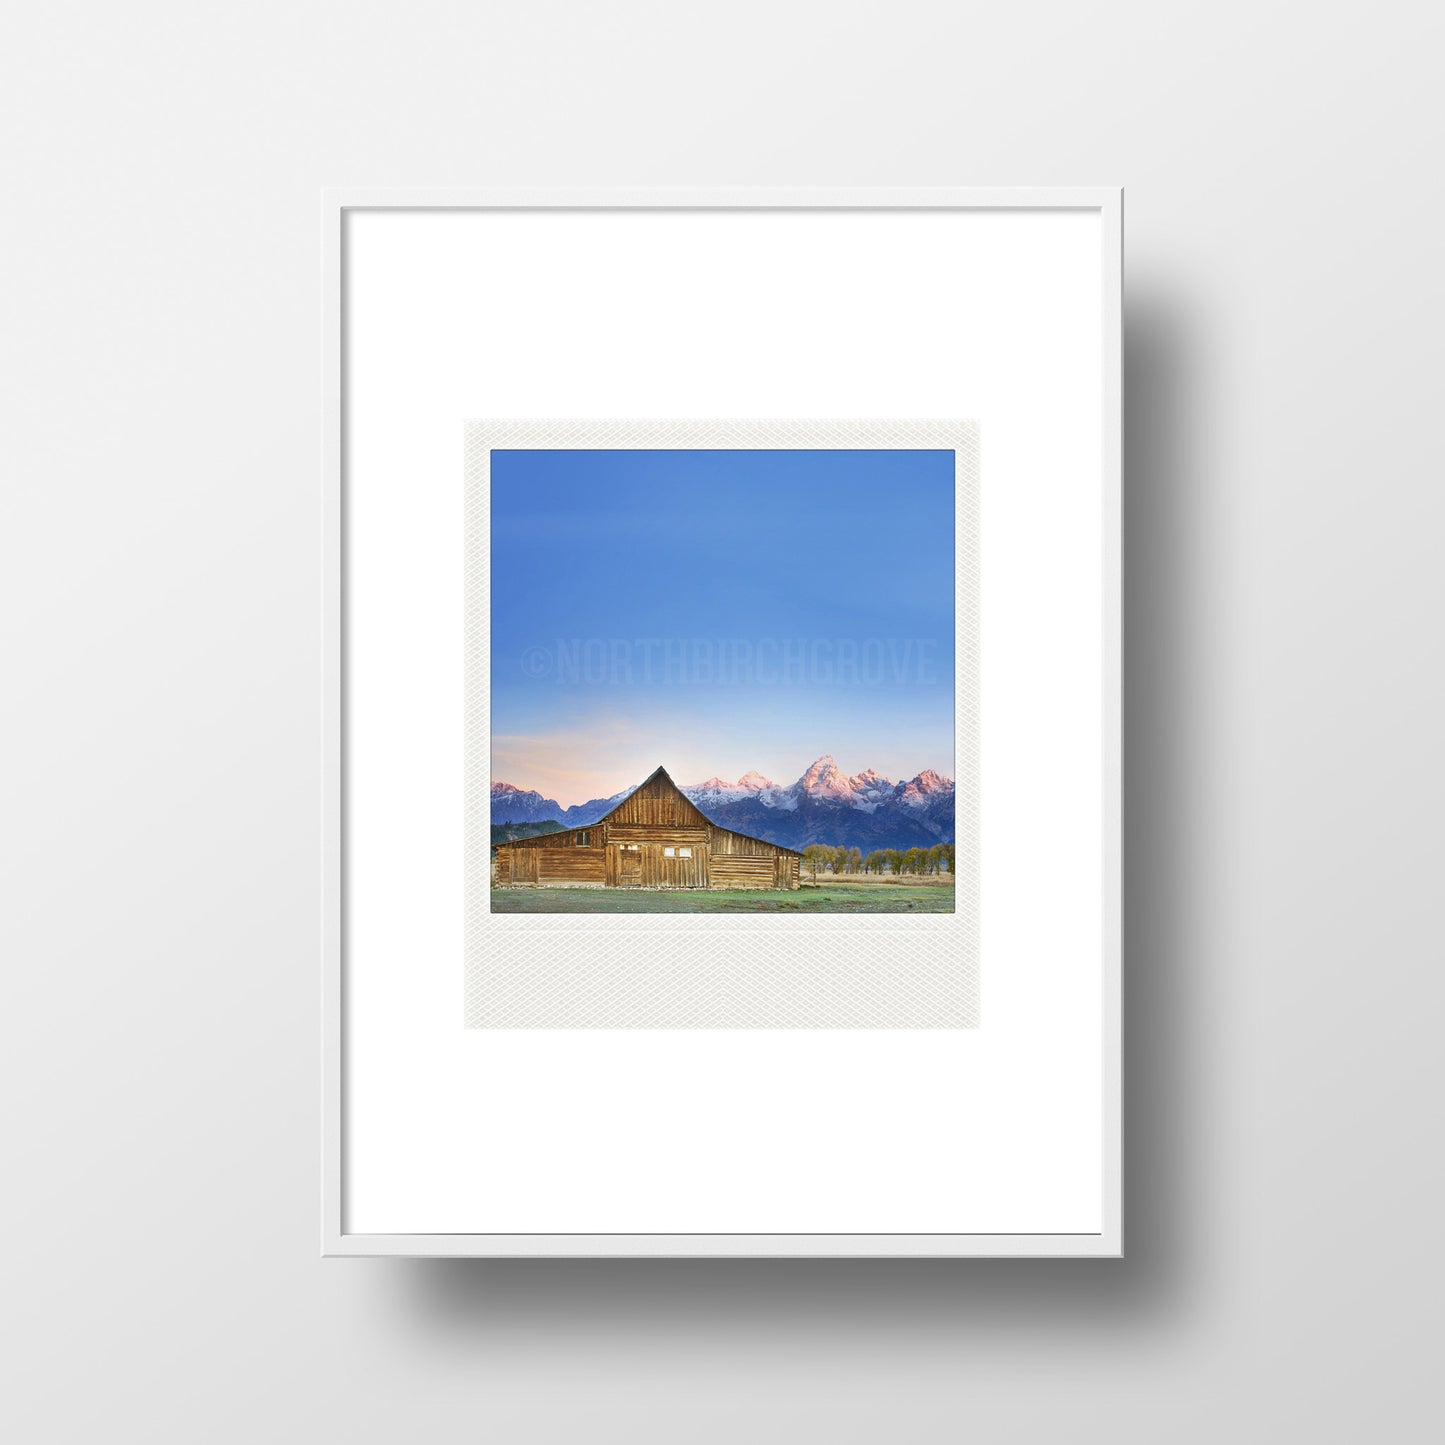 Interrumpido<br> Imán Polaroid metálico<br> Parque Nacional Gran Tetón